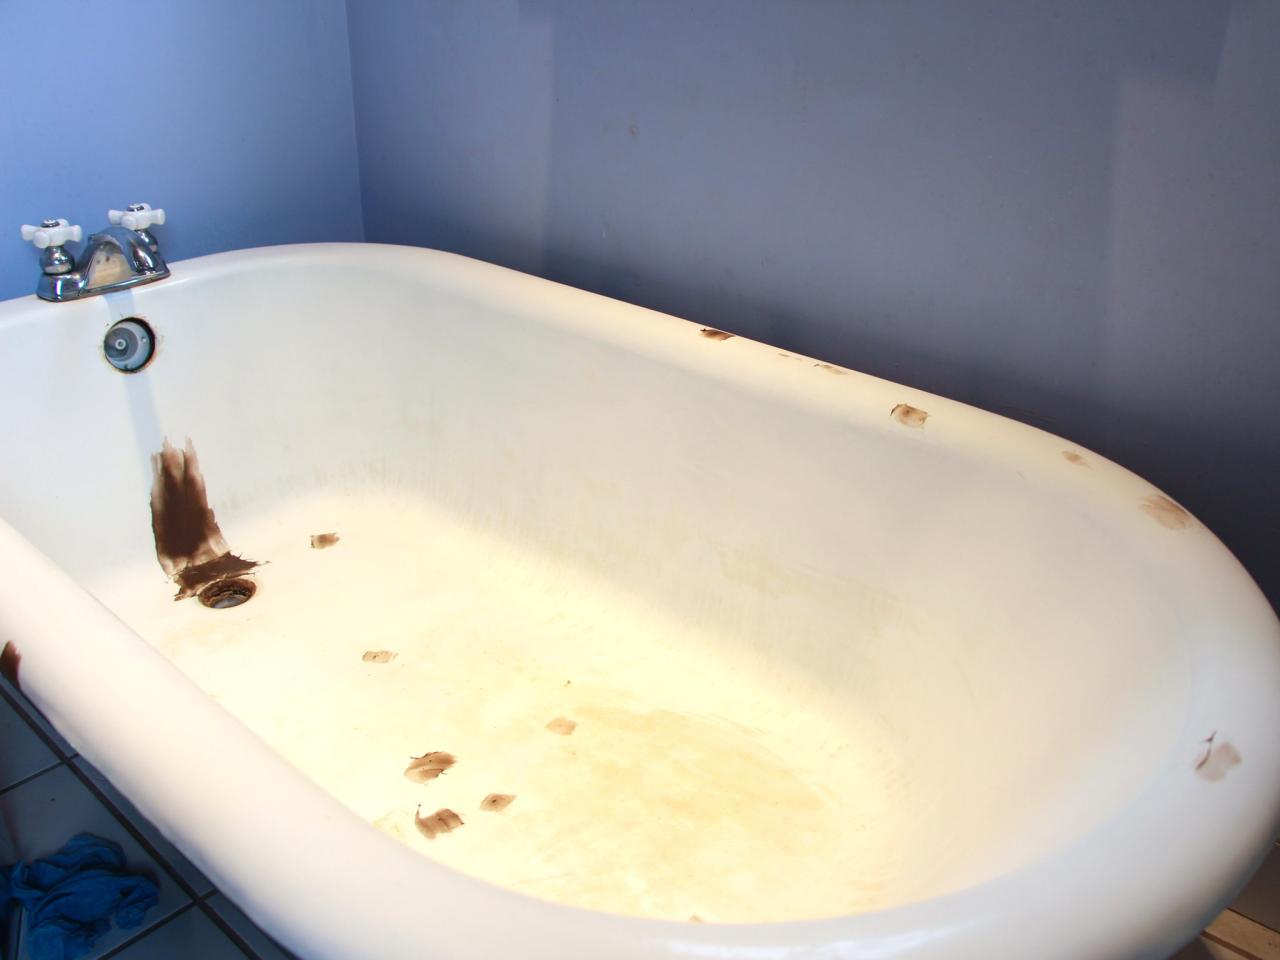 How To Refinish A Bathtub Tos Diy, How To Refinish A Bathtub Yourself